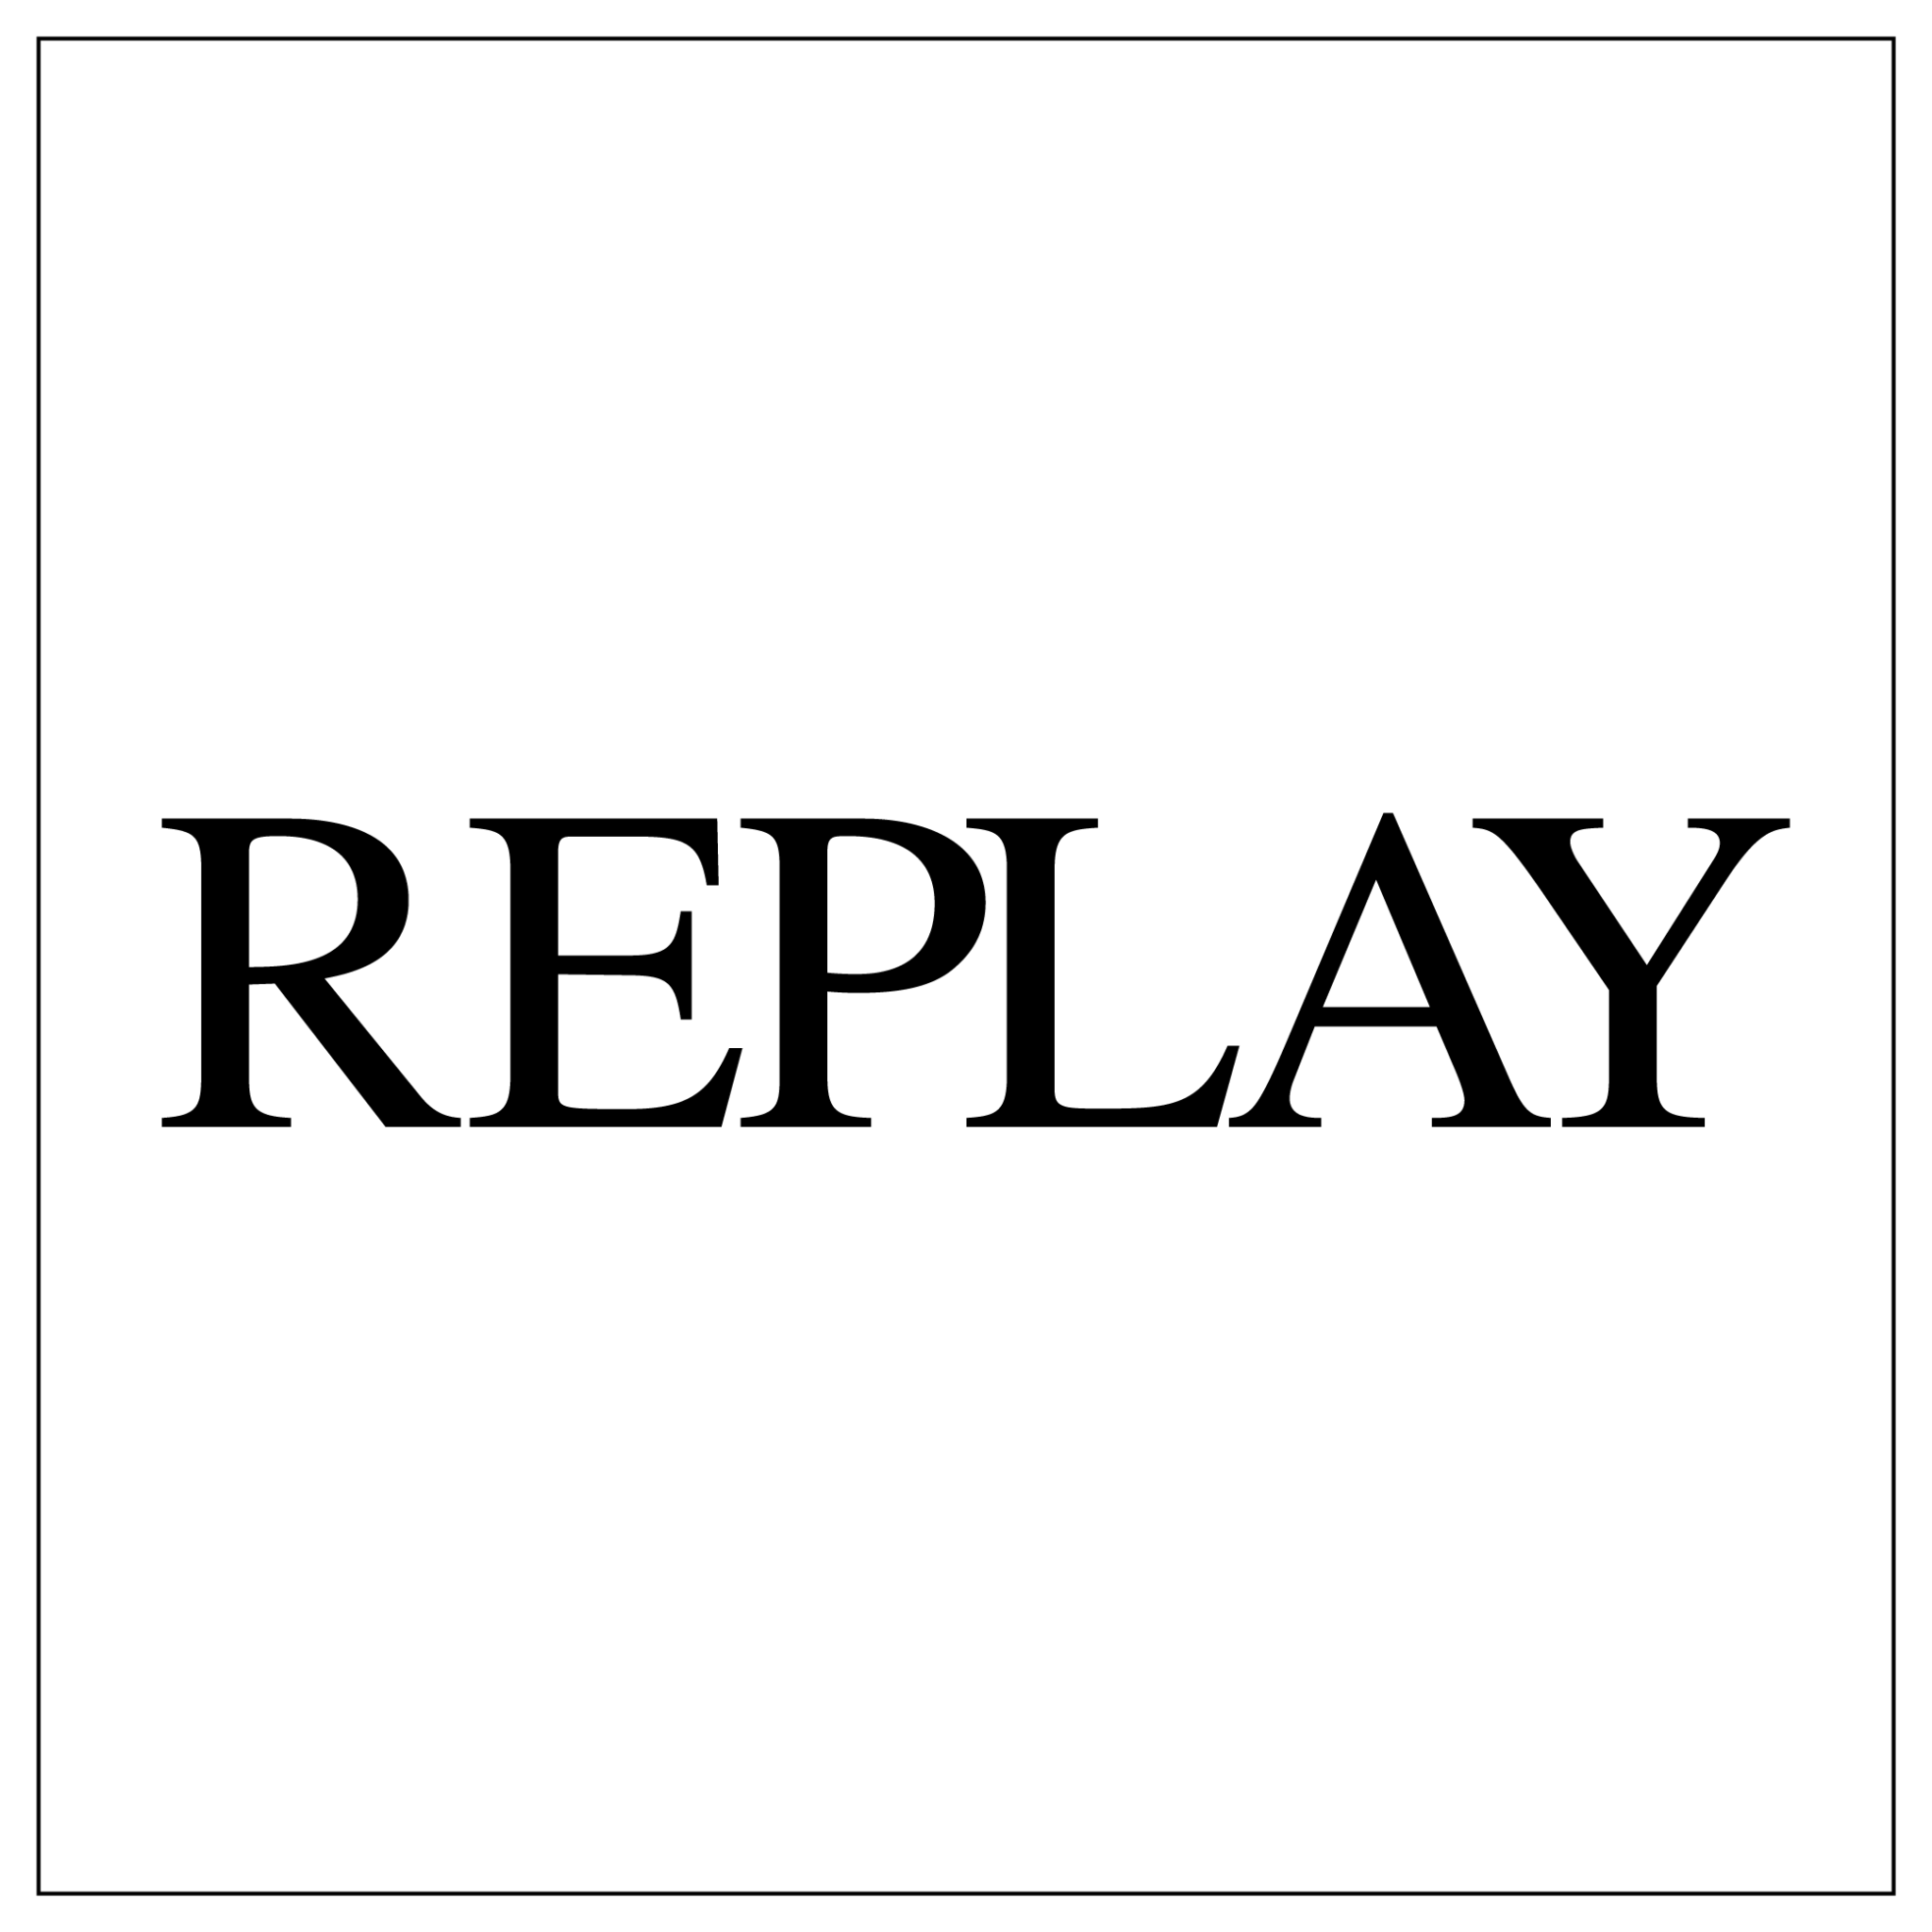 REPLAY -01